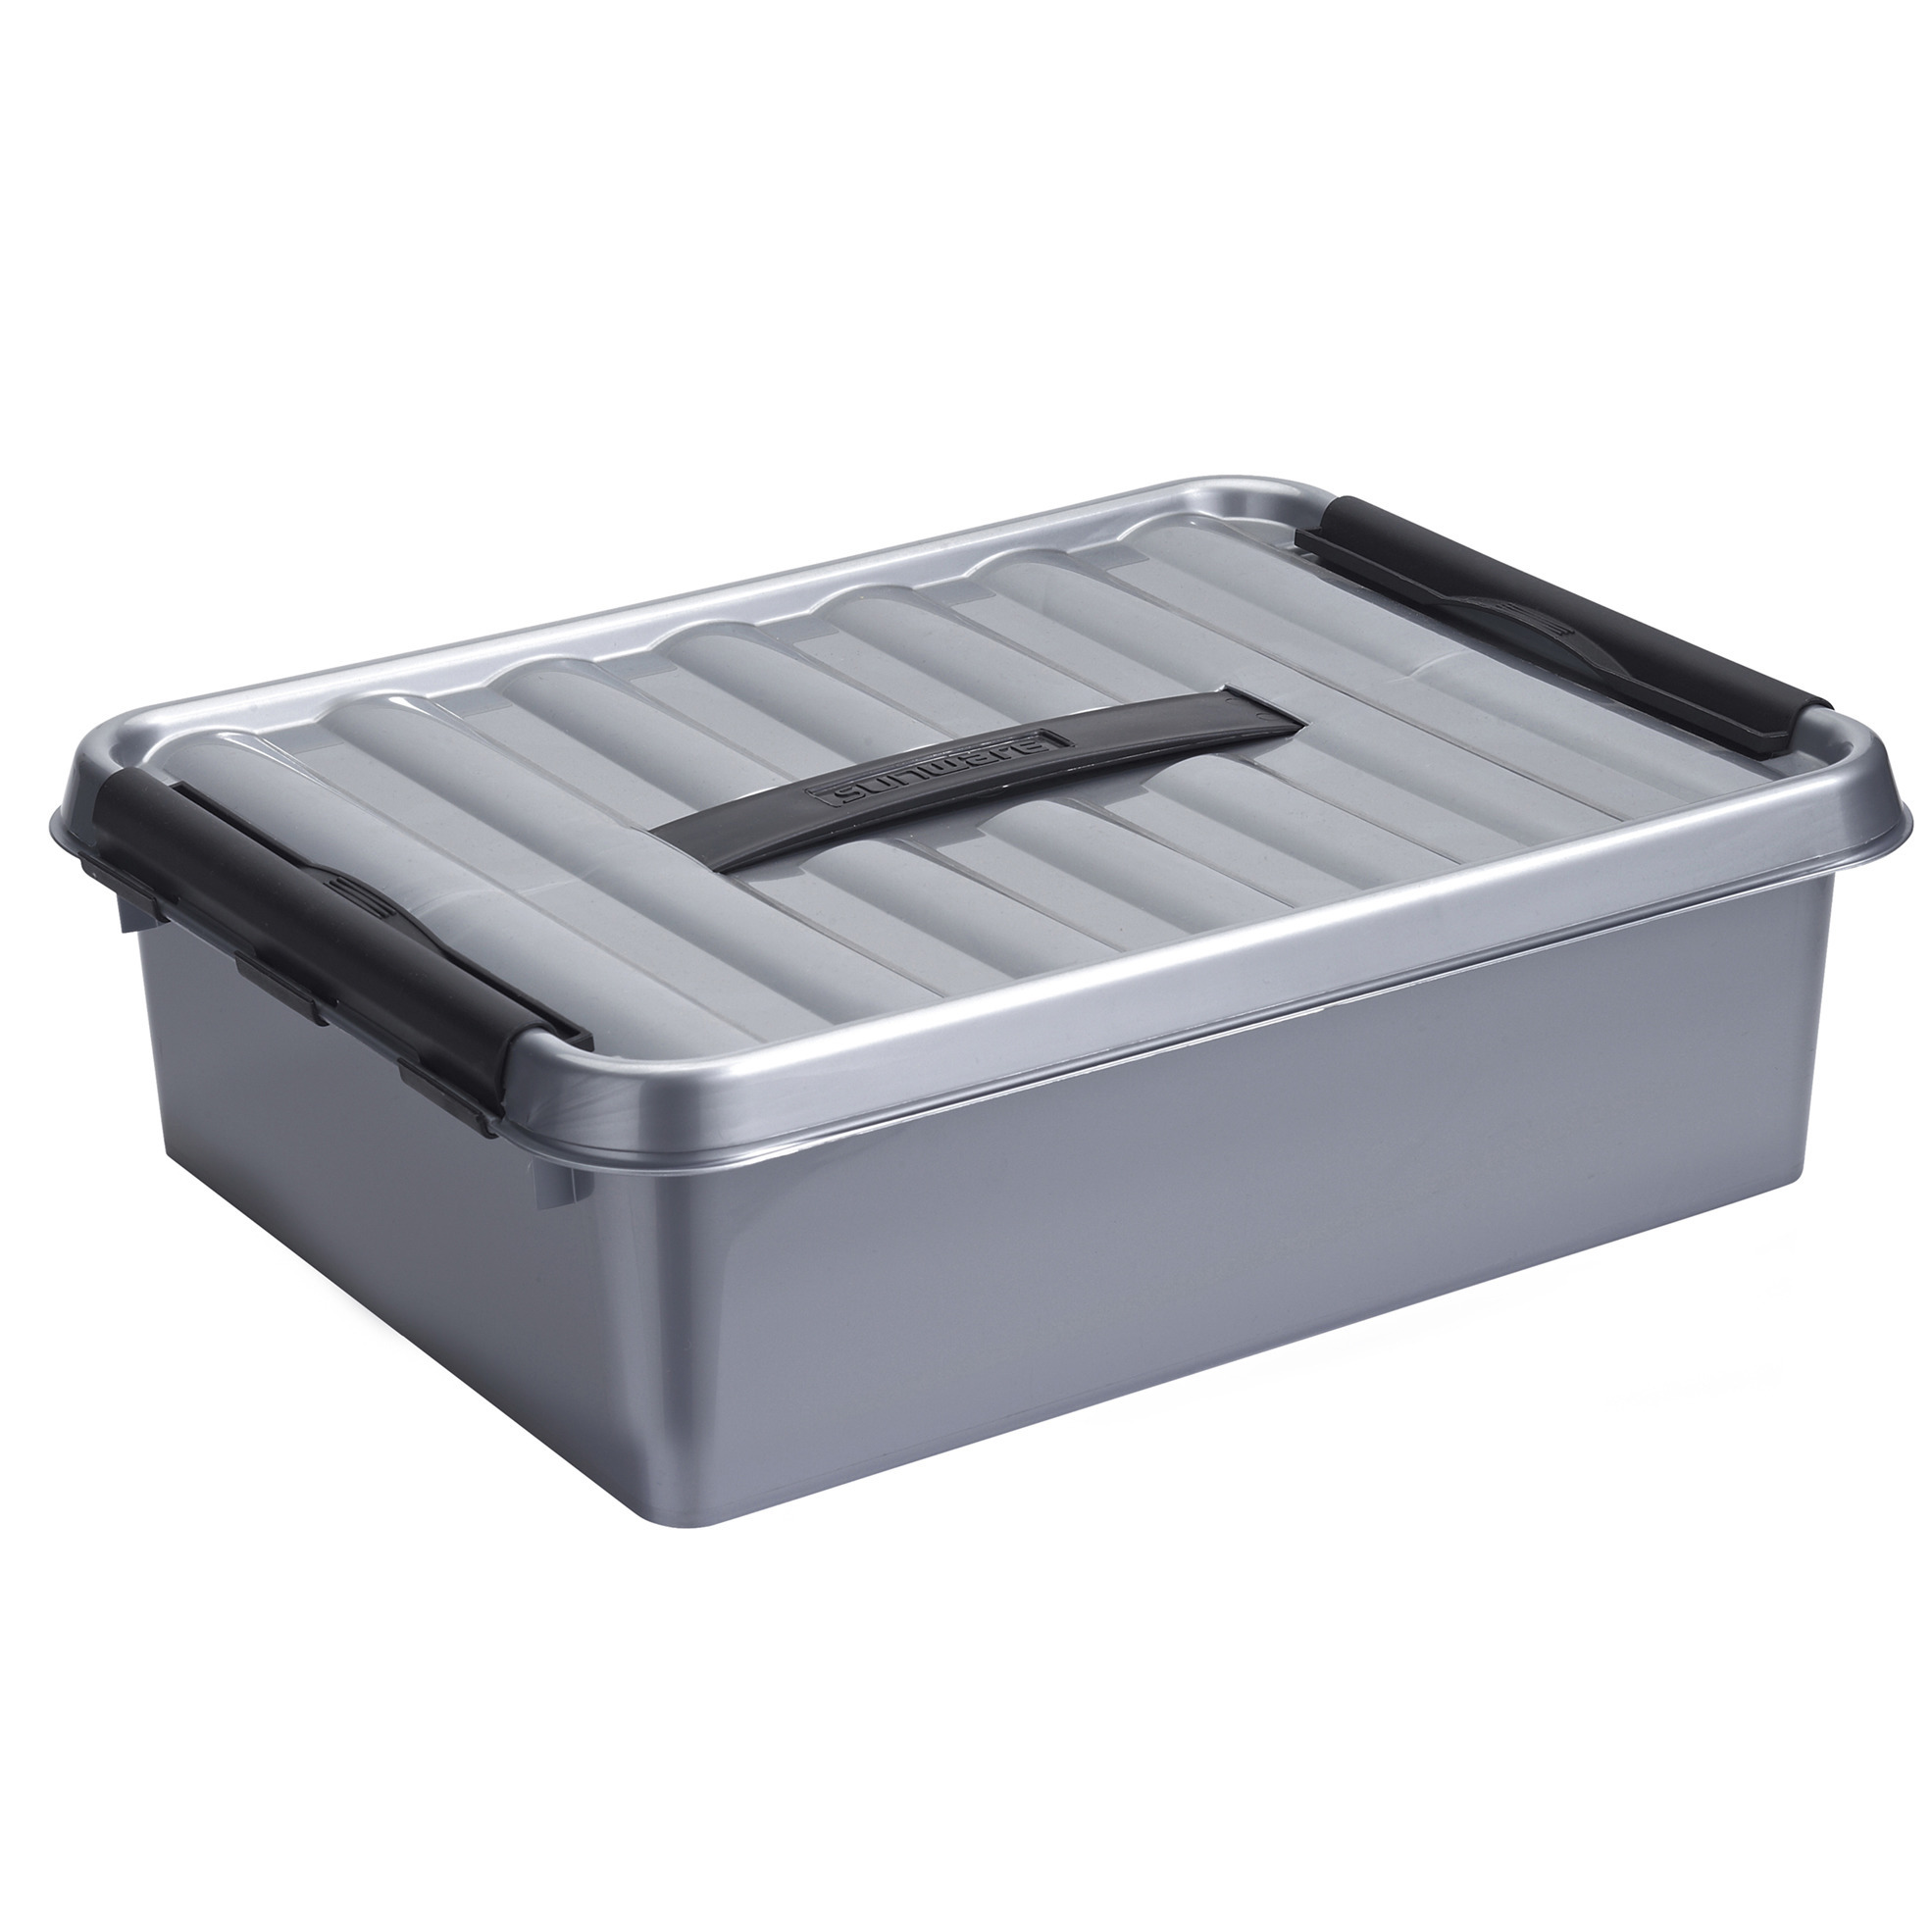 Opbergbox-opbergdoos 10 liter 40 x 30 x 11 cm metallic grijs-zwart